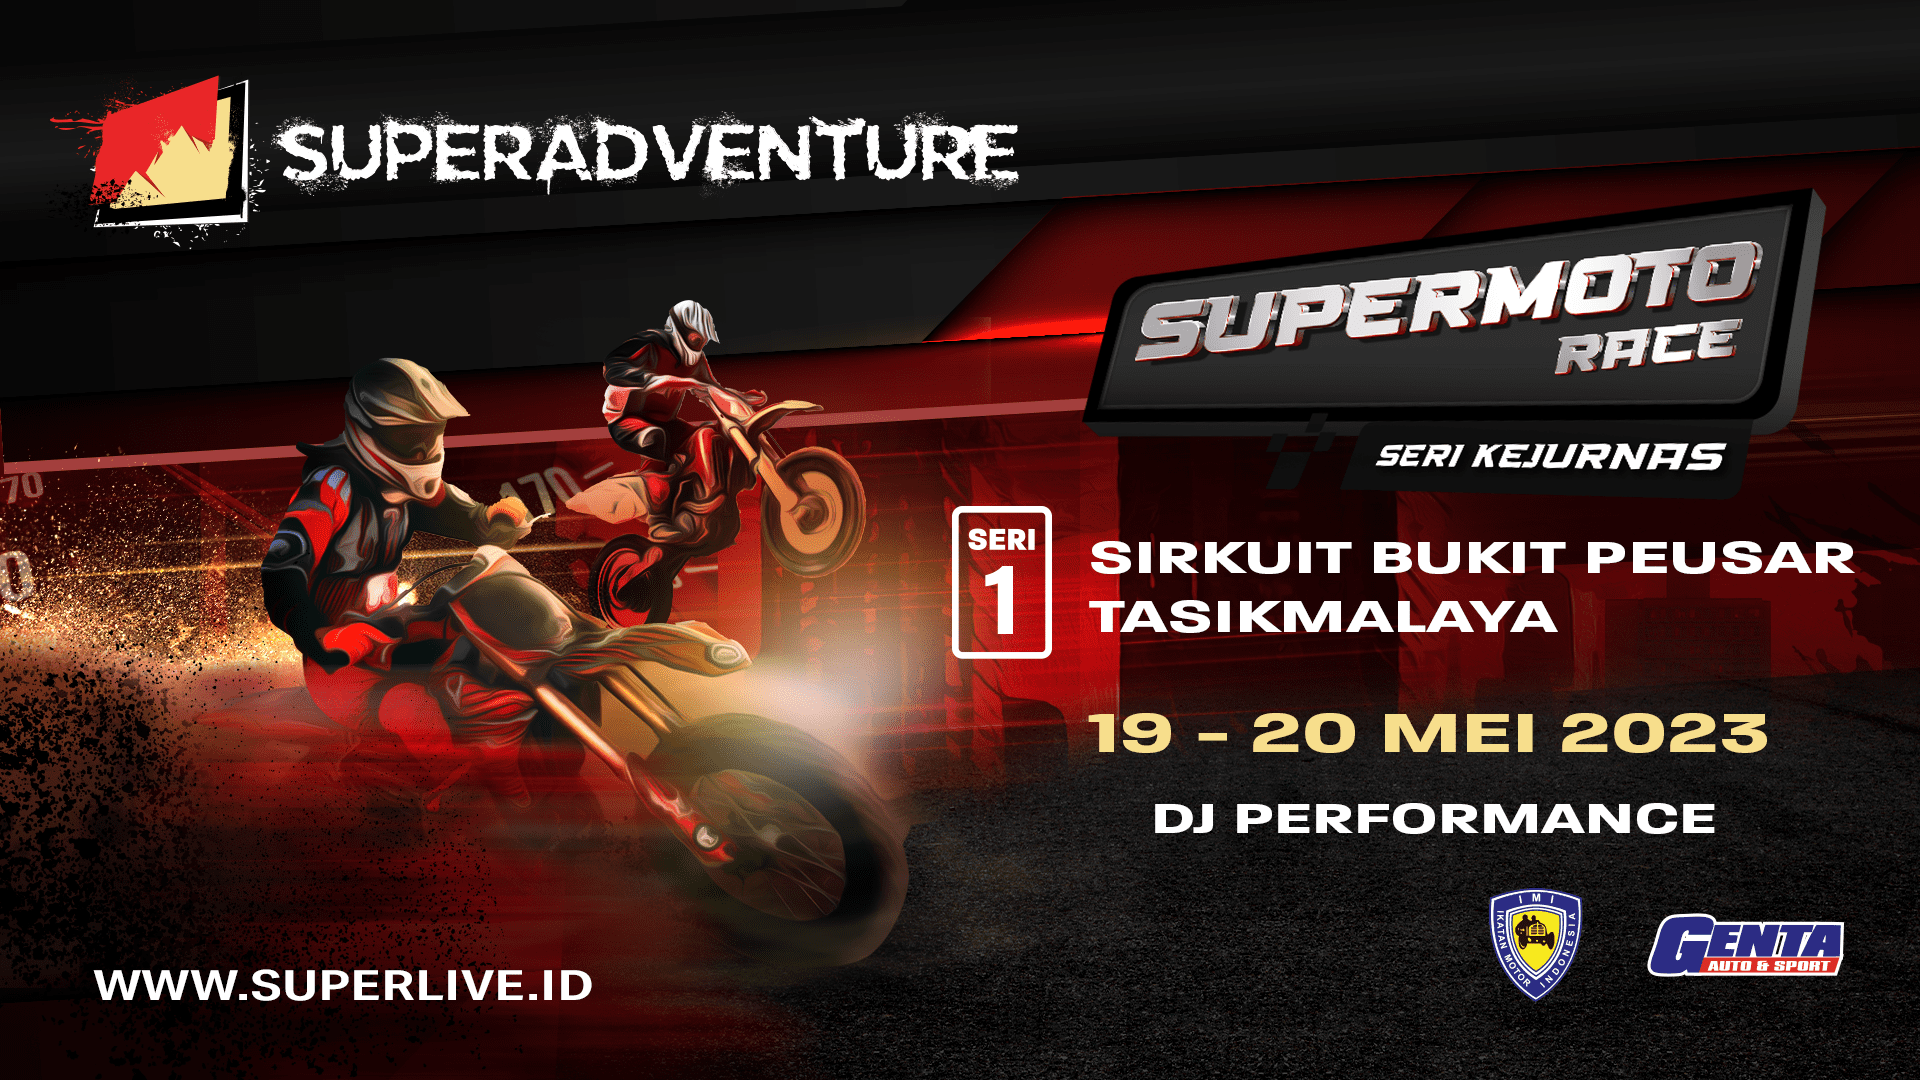 Superadventure Supermoto Race 2023 Seri 1 Tasikmalaya